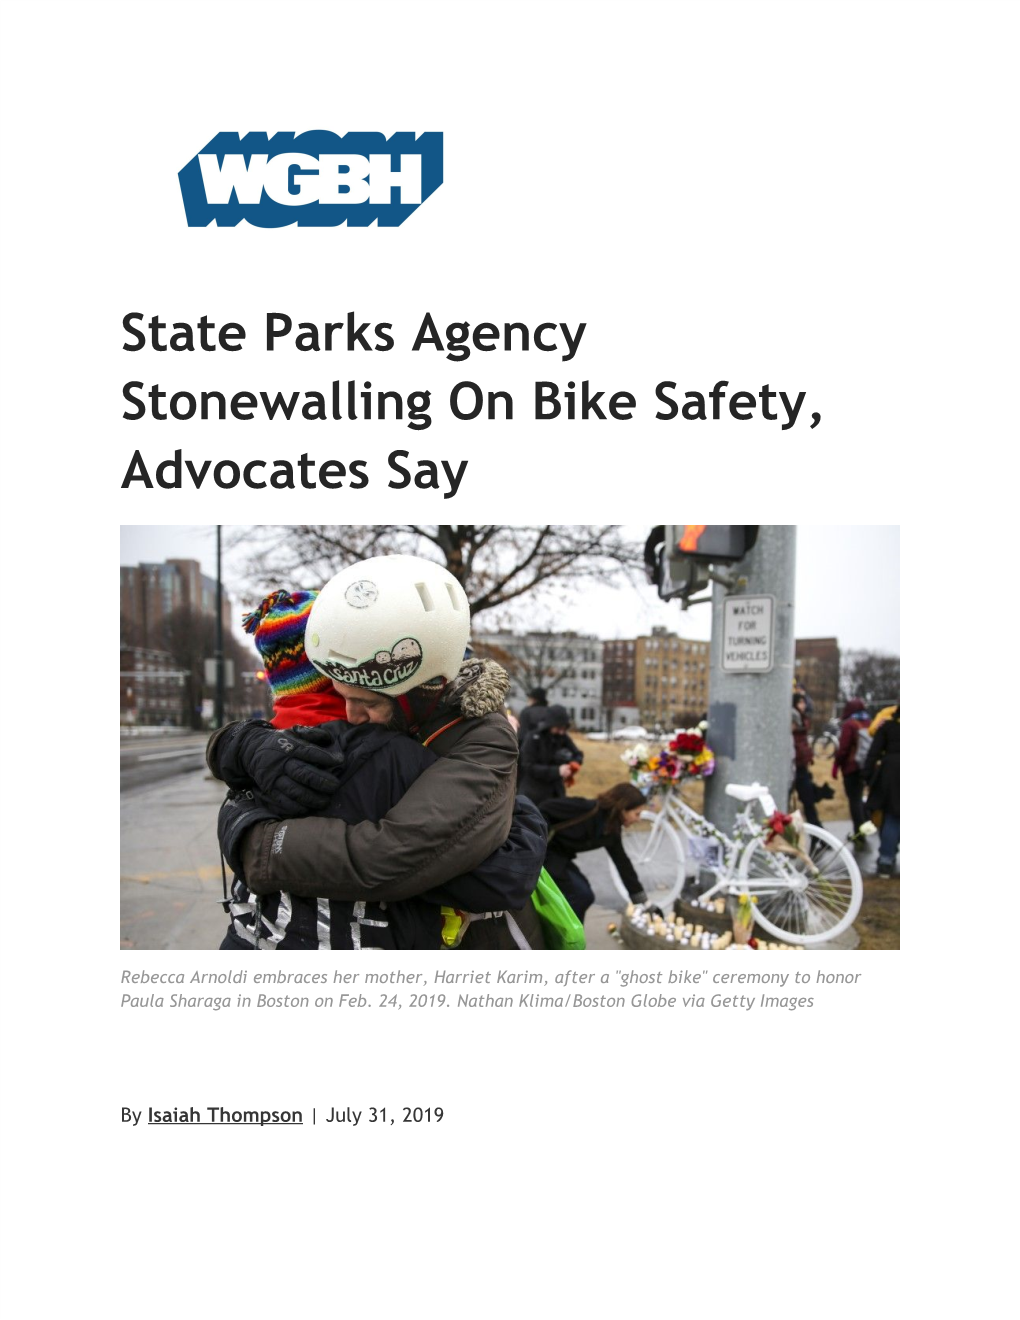 State Parks Agency Stonewalling on Bike Safety, Advocates Say